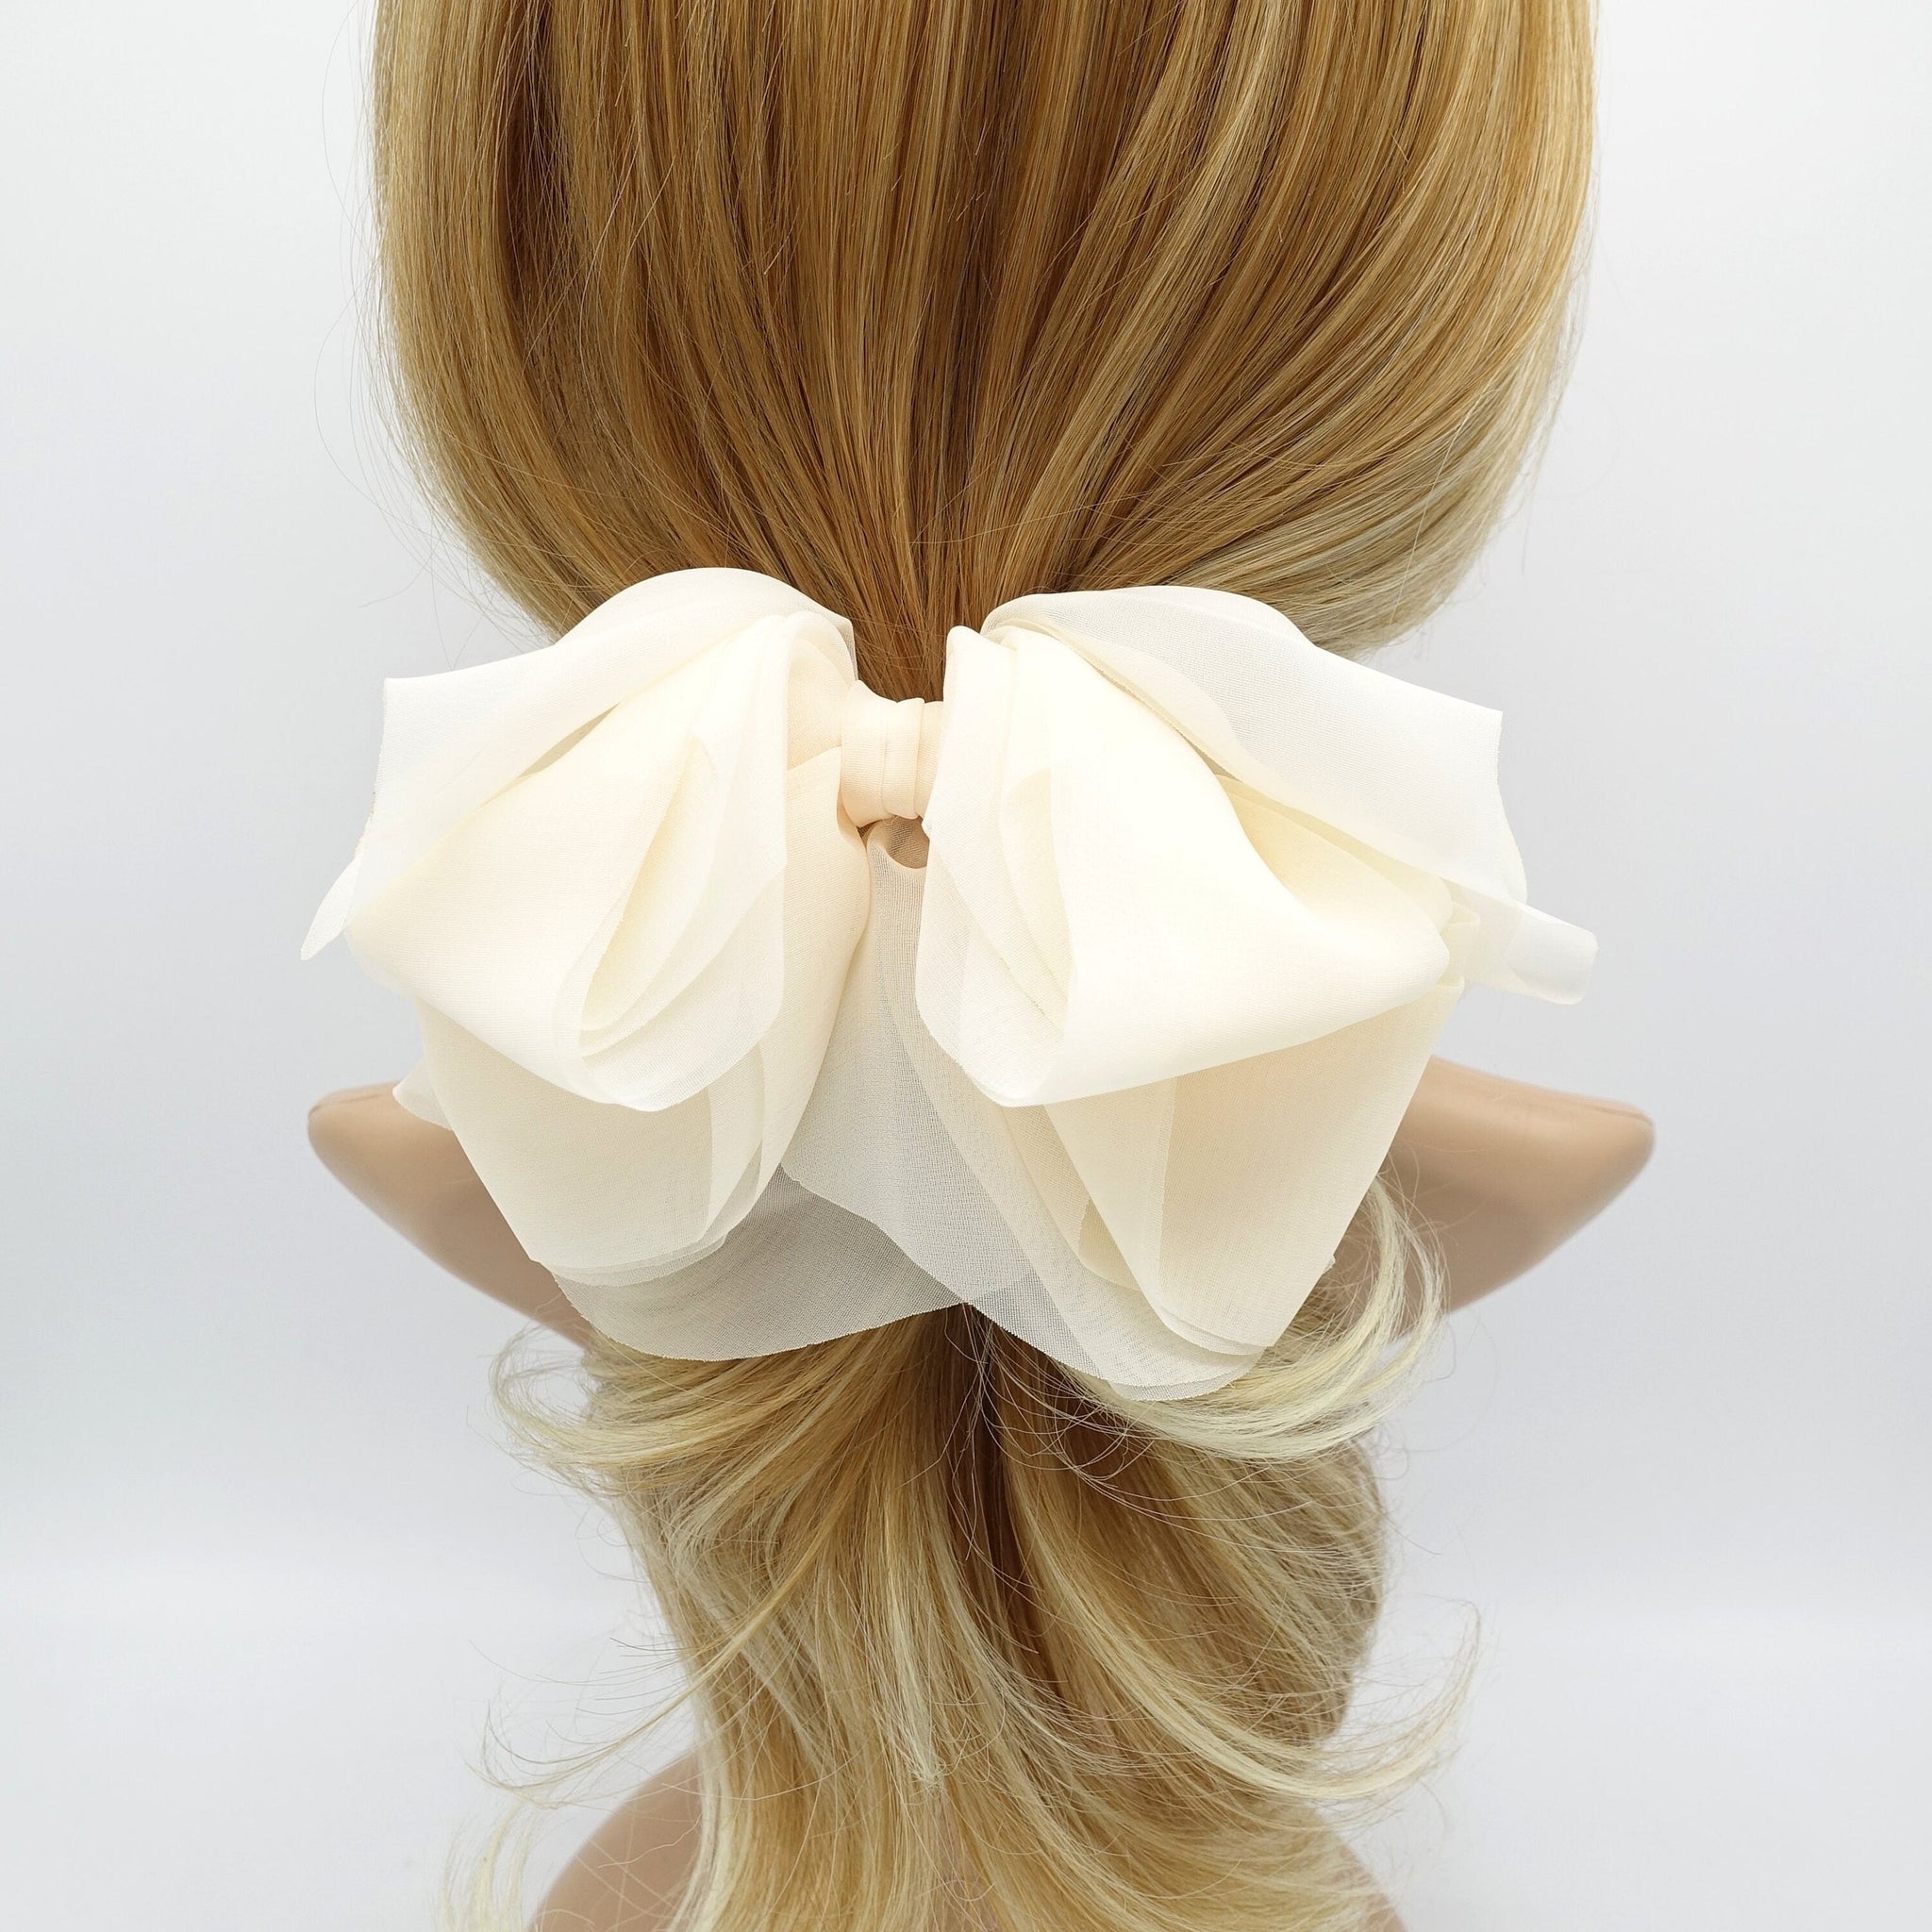 veryshine.com Barrette (Bow) Cream white floppy hair bow chiffon multi layered bow women hair accessory